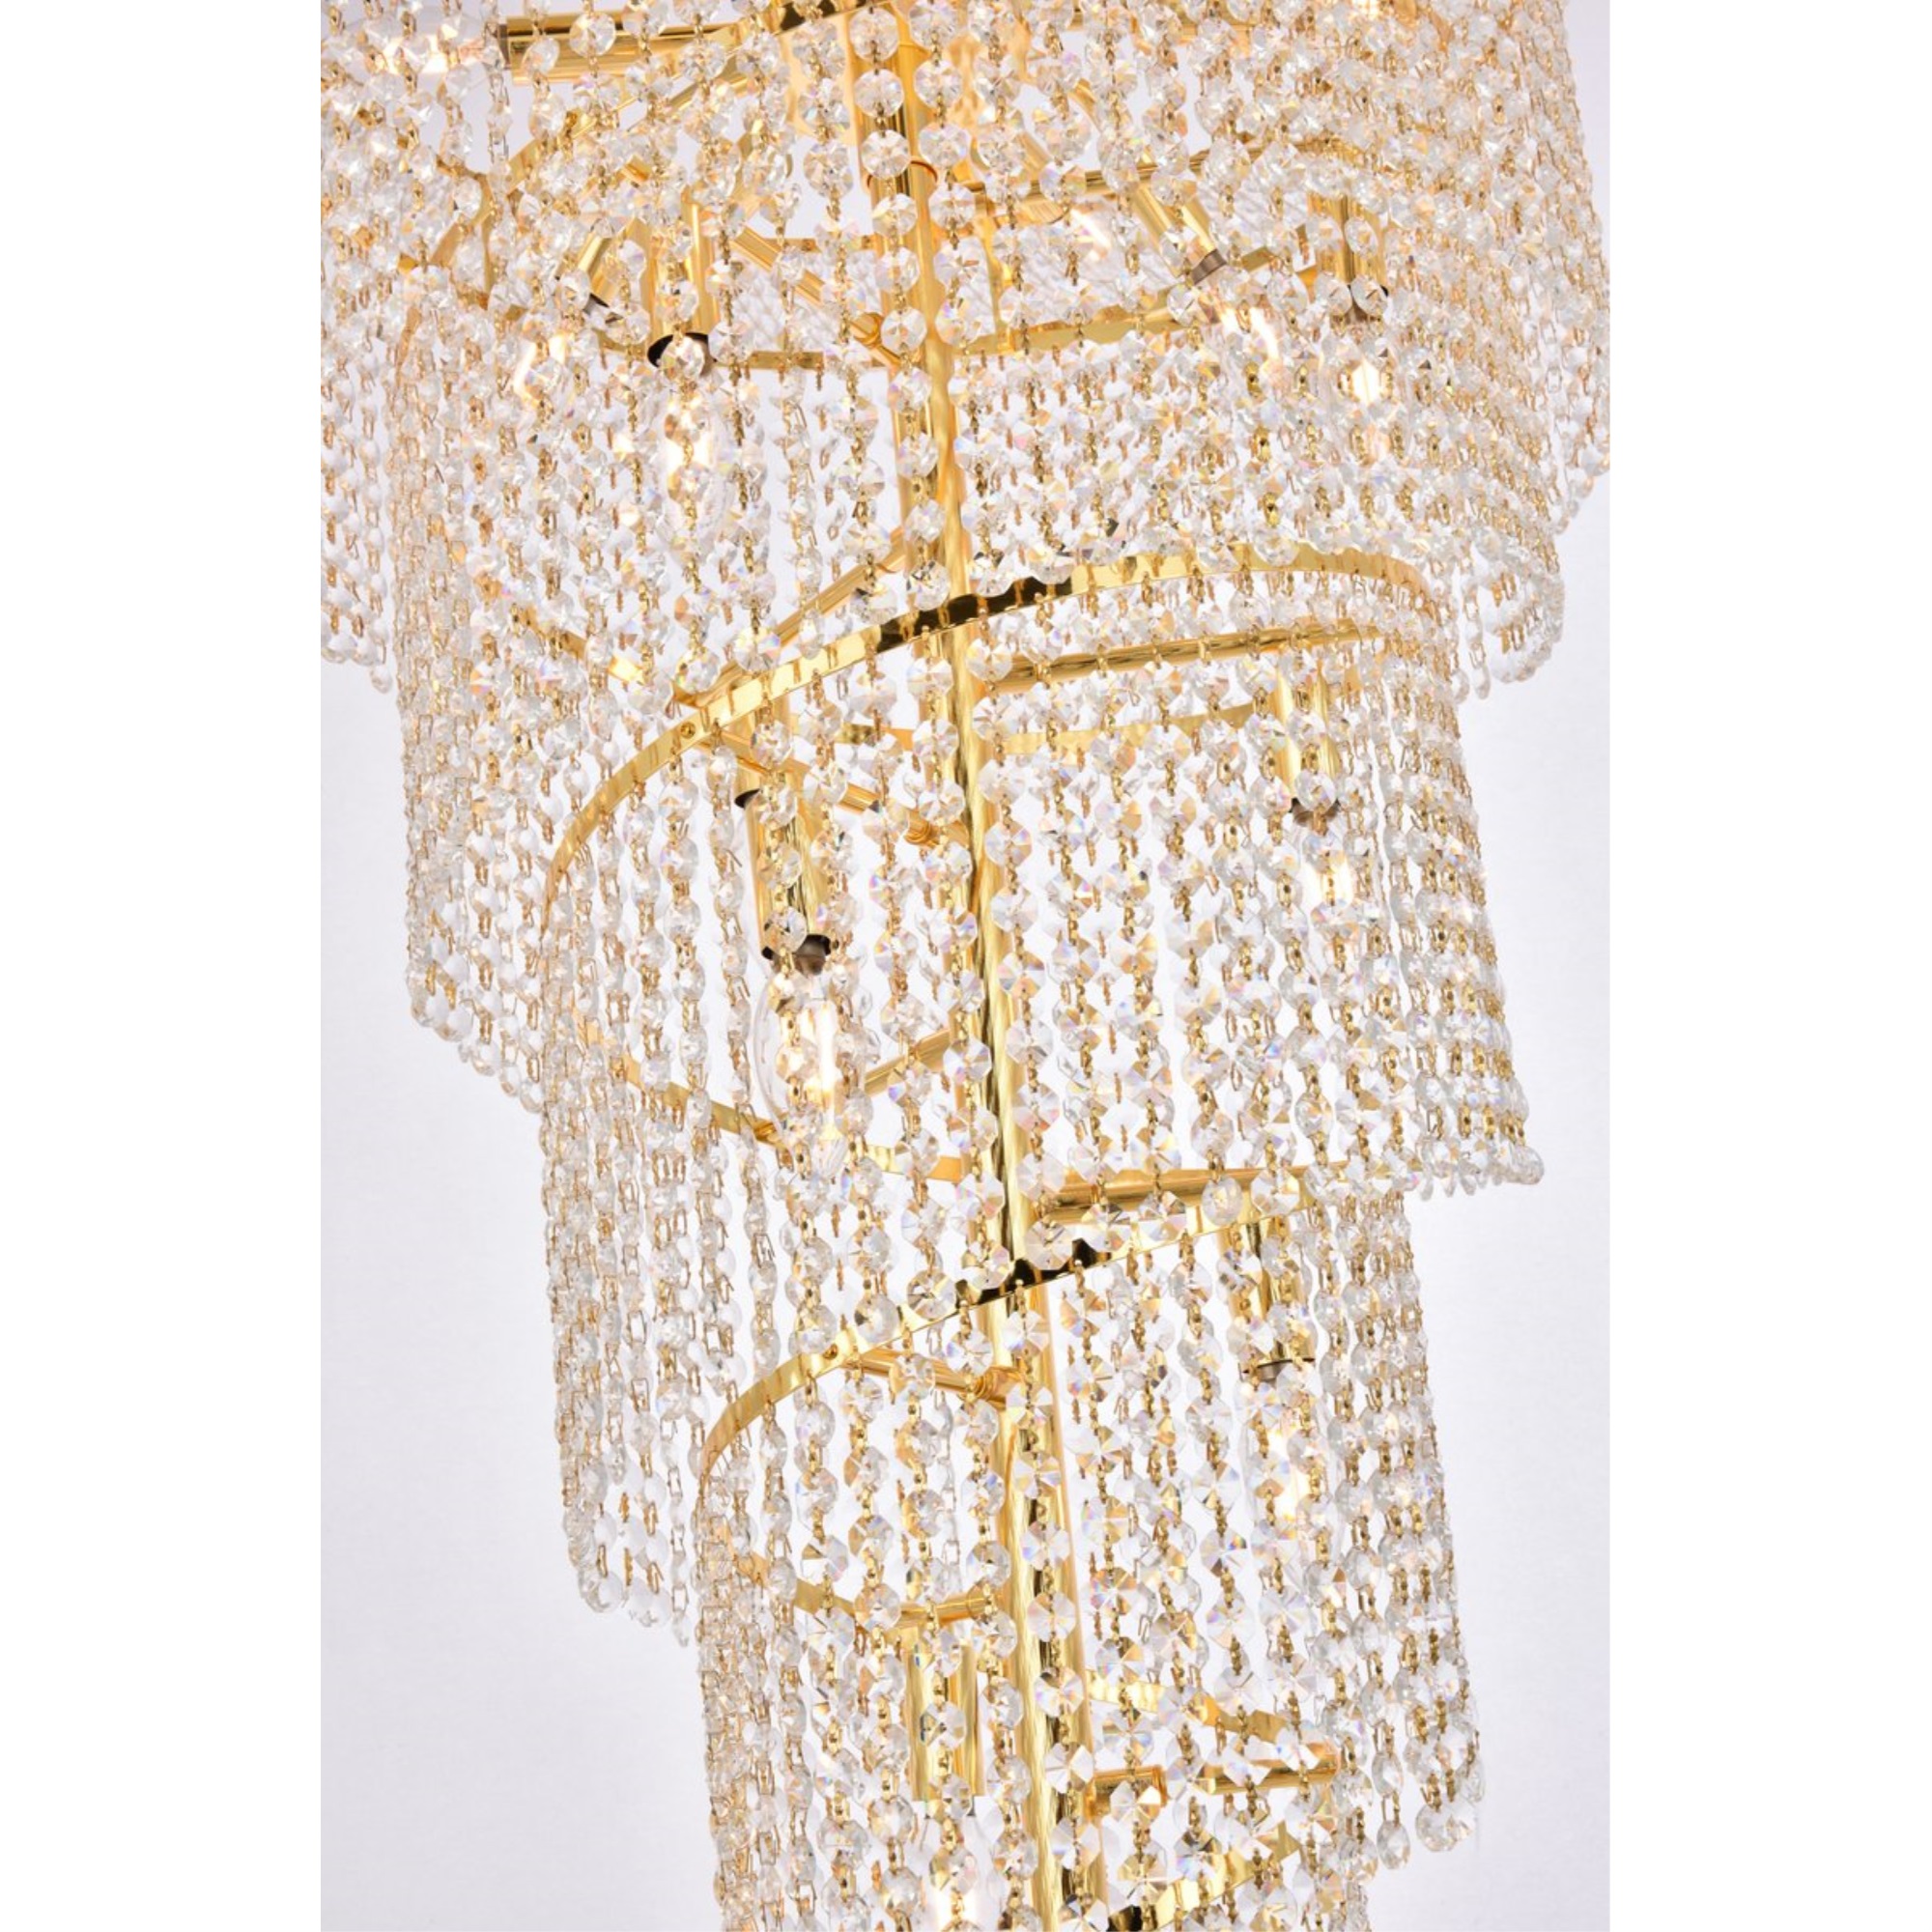 Elegant Lighting 1800 Spiral Collection Chandelier D:21in H:60in Lt:22 Gold Finish (Royal Cut Crystals)